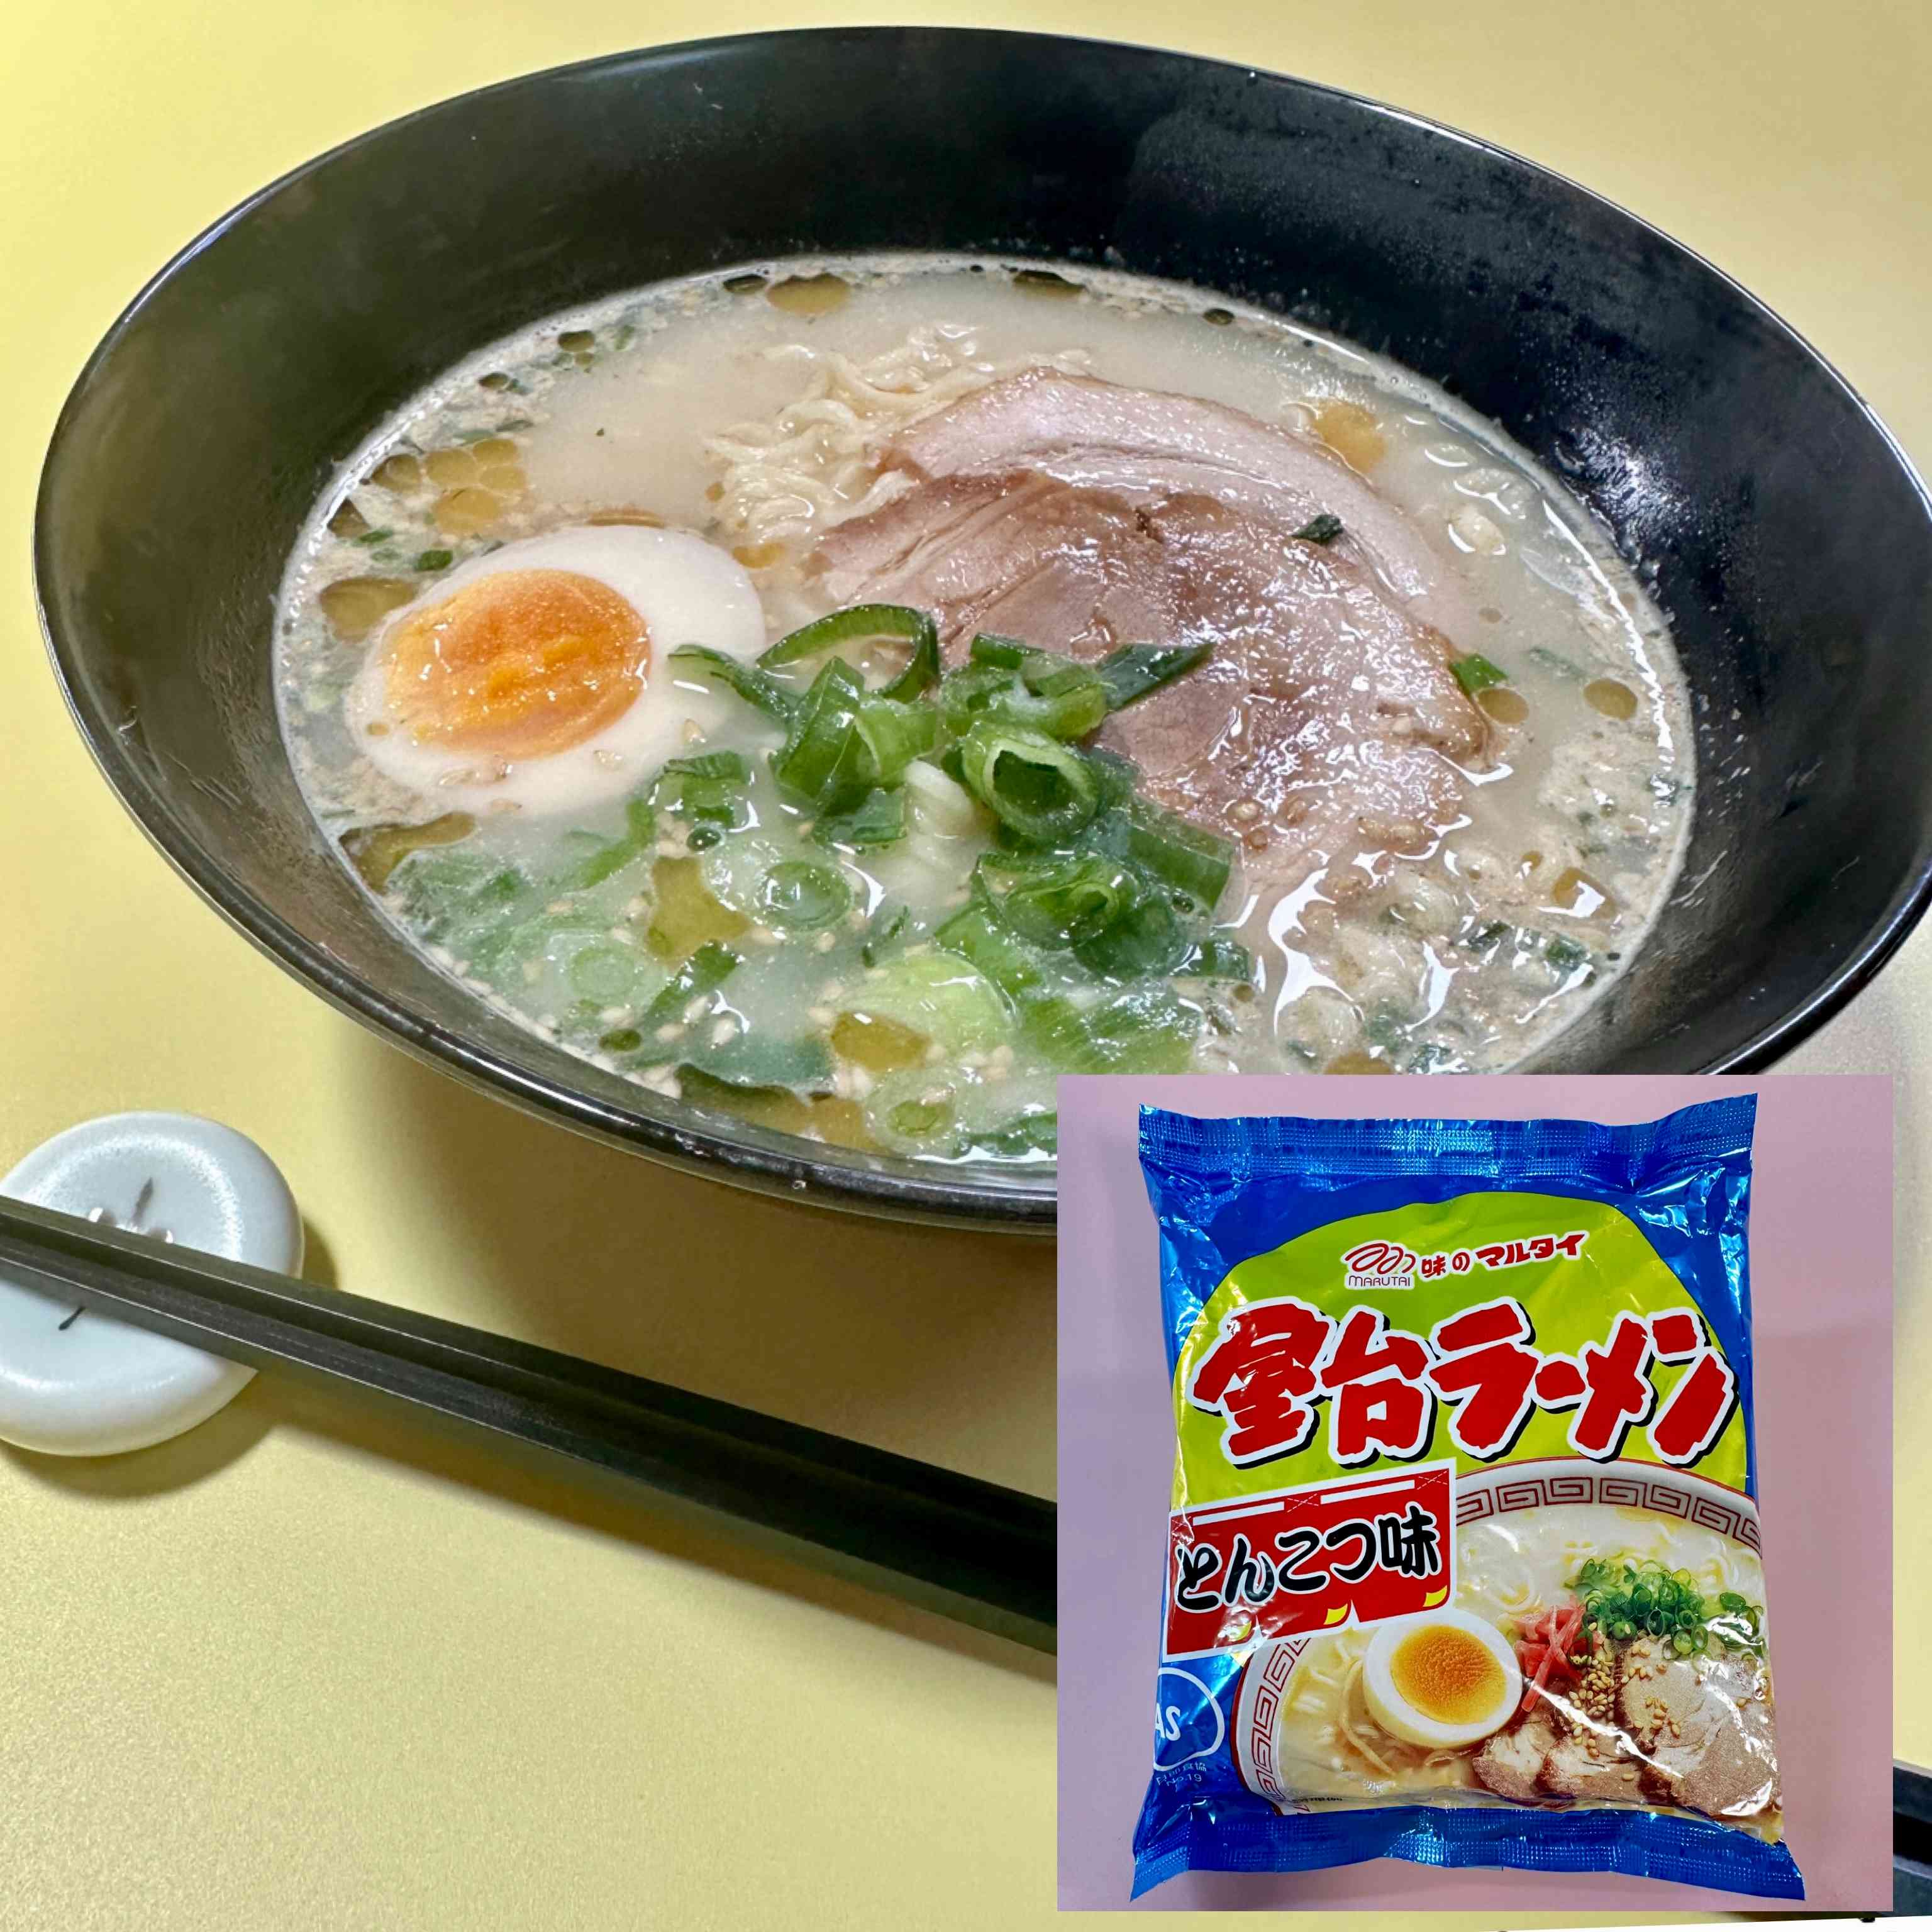 【MARUTAI】Street vendor ramen Tonkotsu flavor.　1bag　99ｇ（Bagged noodles）